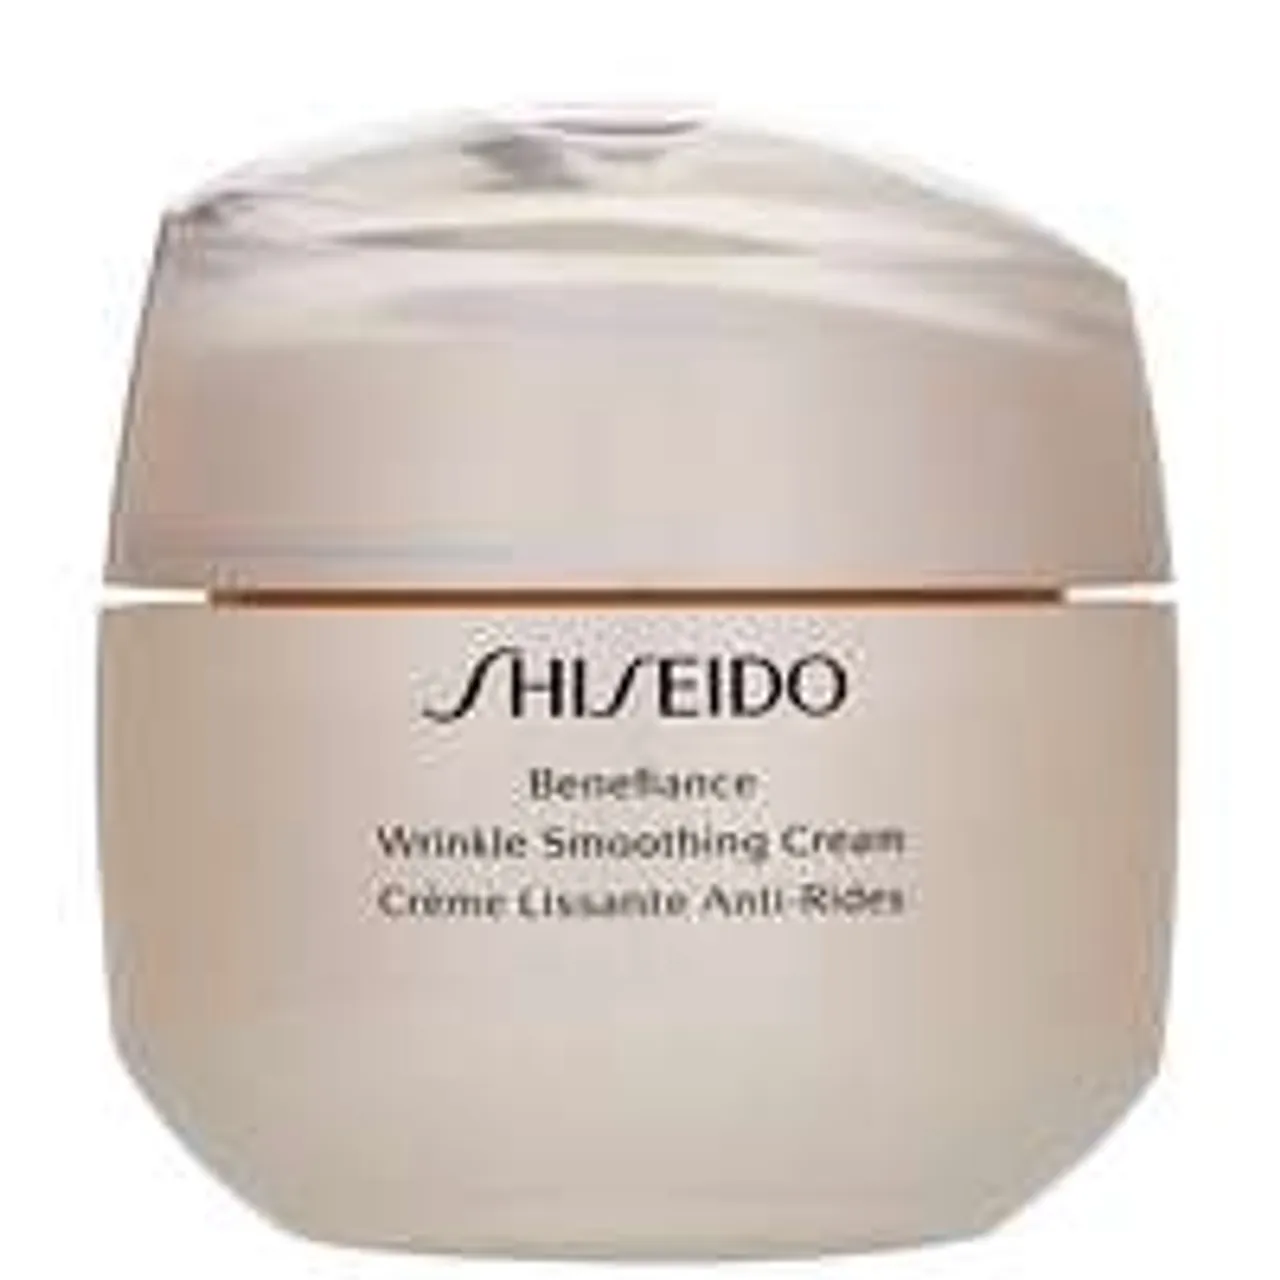 Shiseido Day And Night Creams Benefiance: Wrinkle Smoothing Cream 75ml